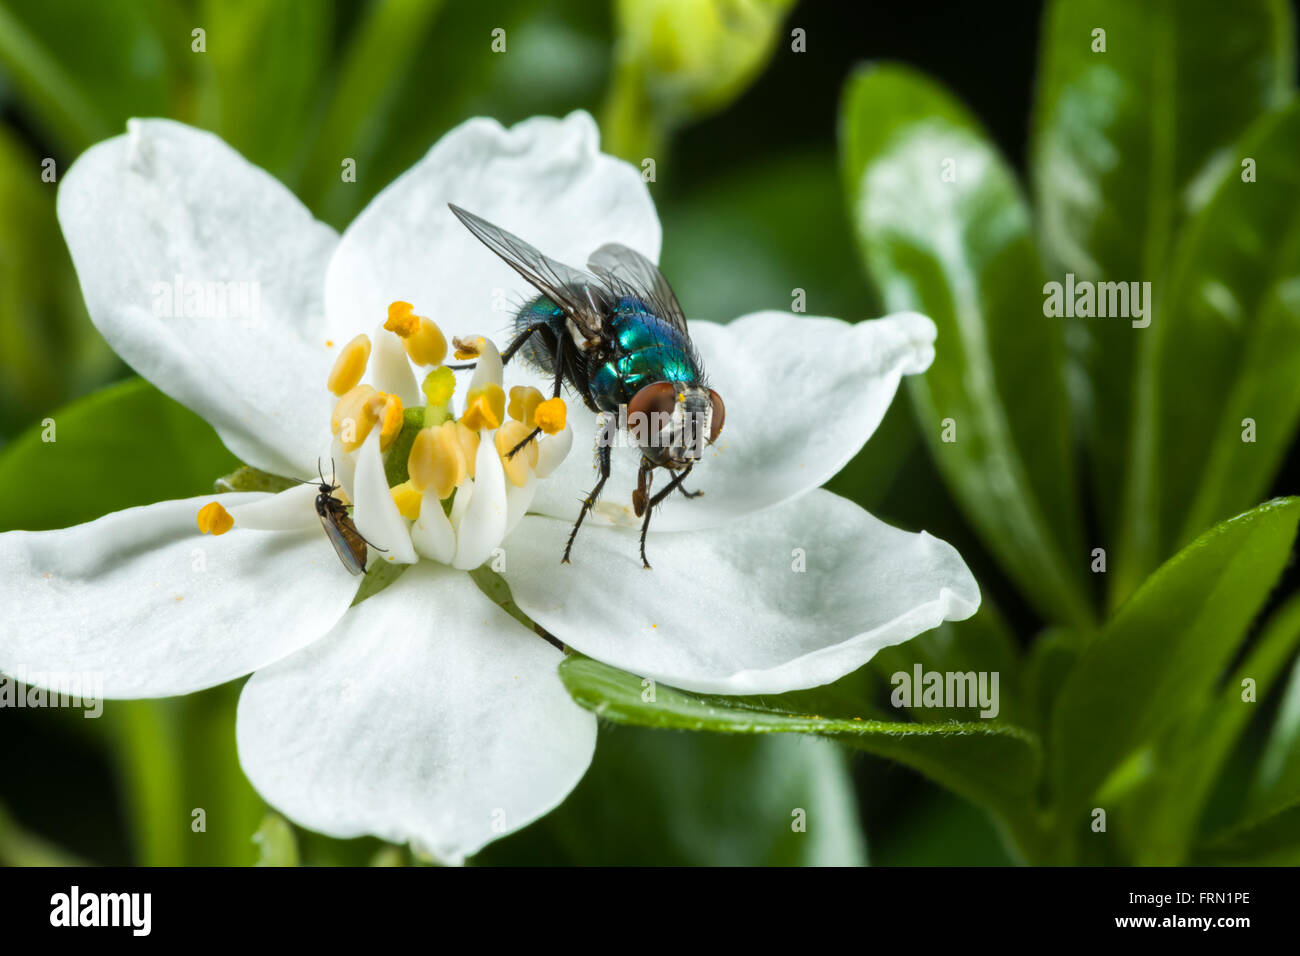 Northern blowfly, Blue-bottle fly Protophormia terraenovae, on a white Choisya shrub flower Stock Photo